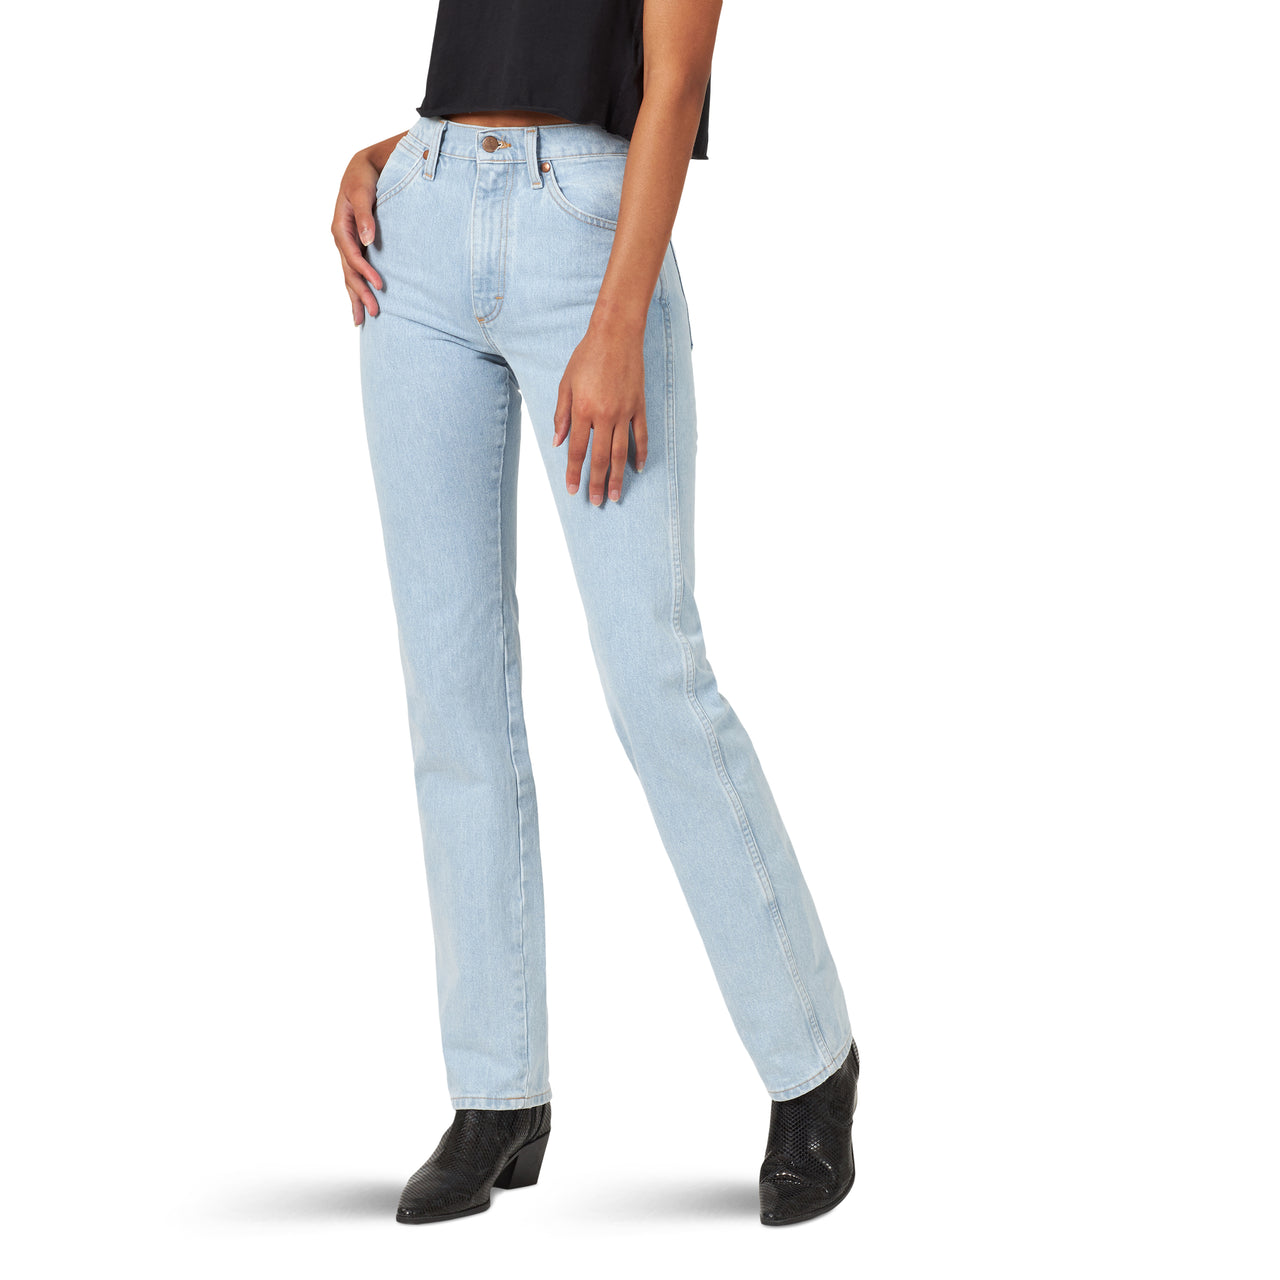 Wrangler Women's Cowboy Cut Slim Fit Jeans - Bleach